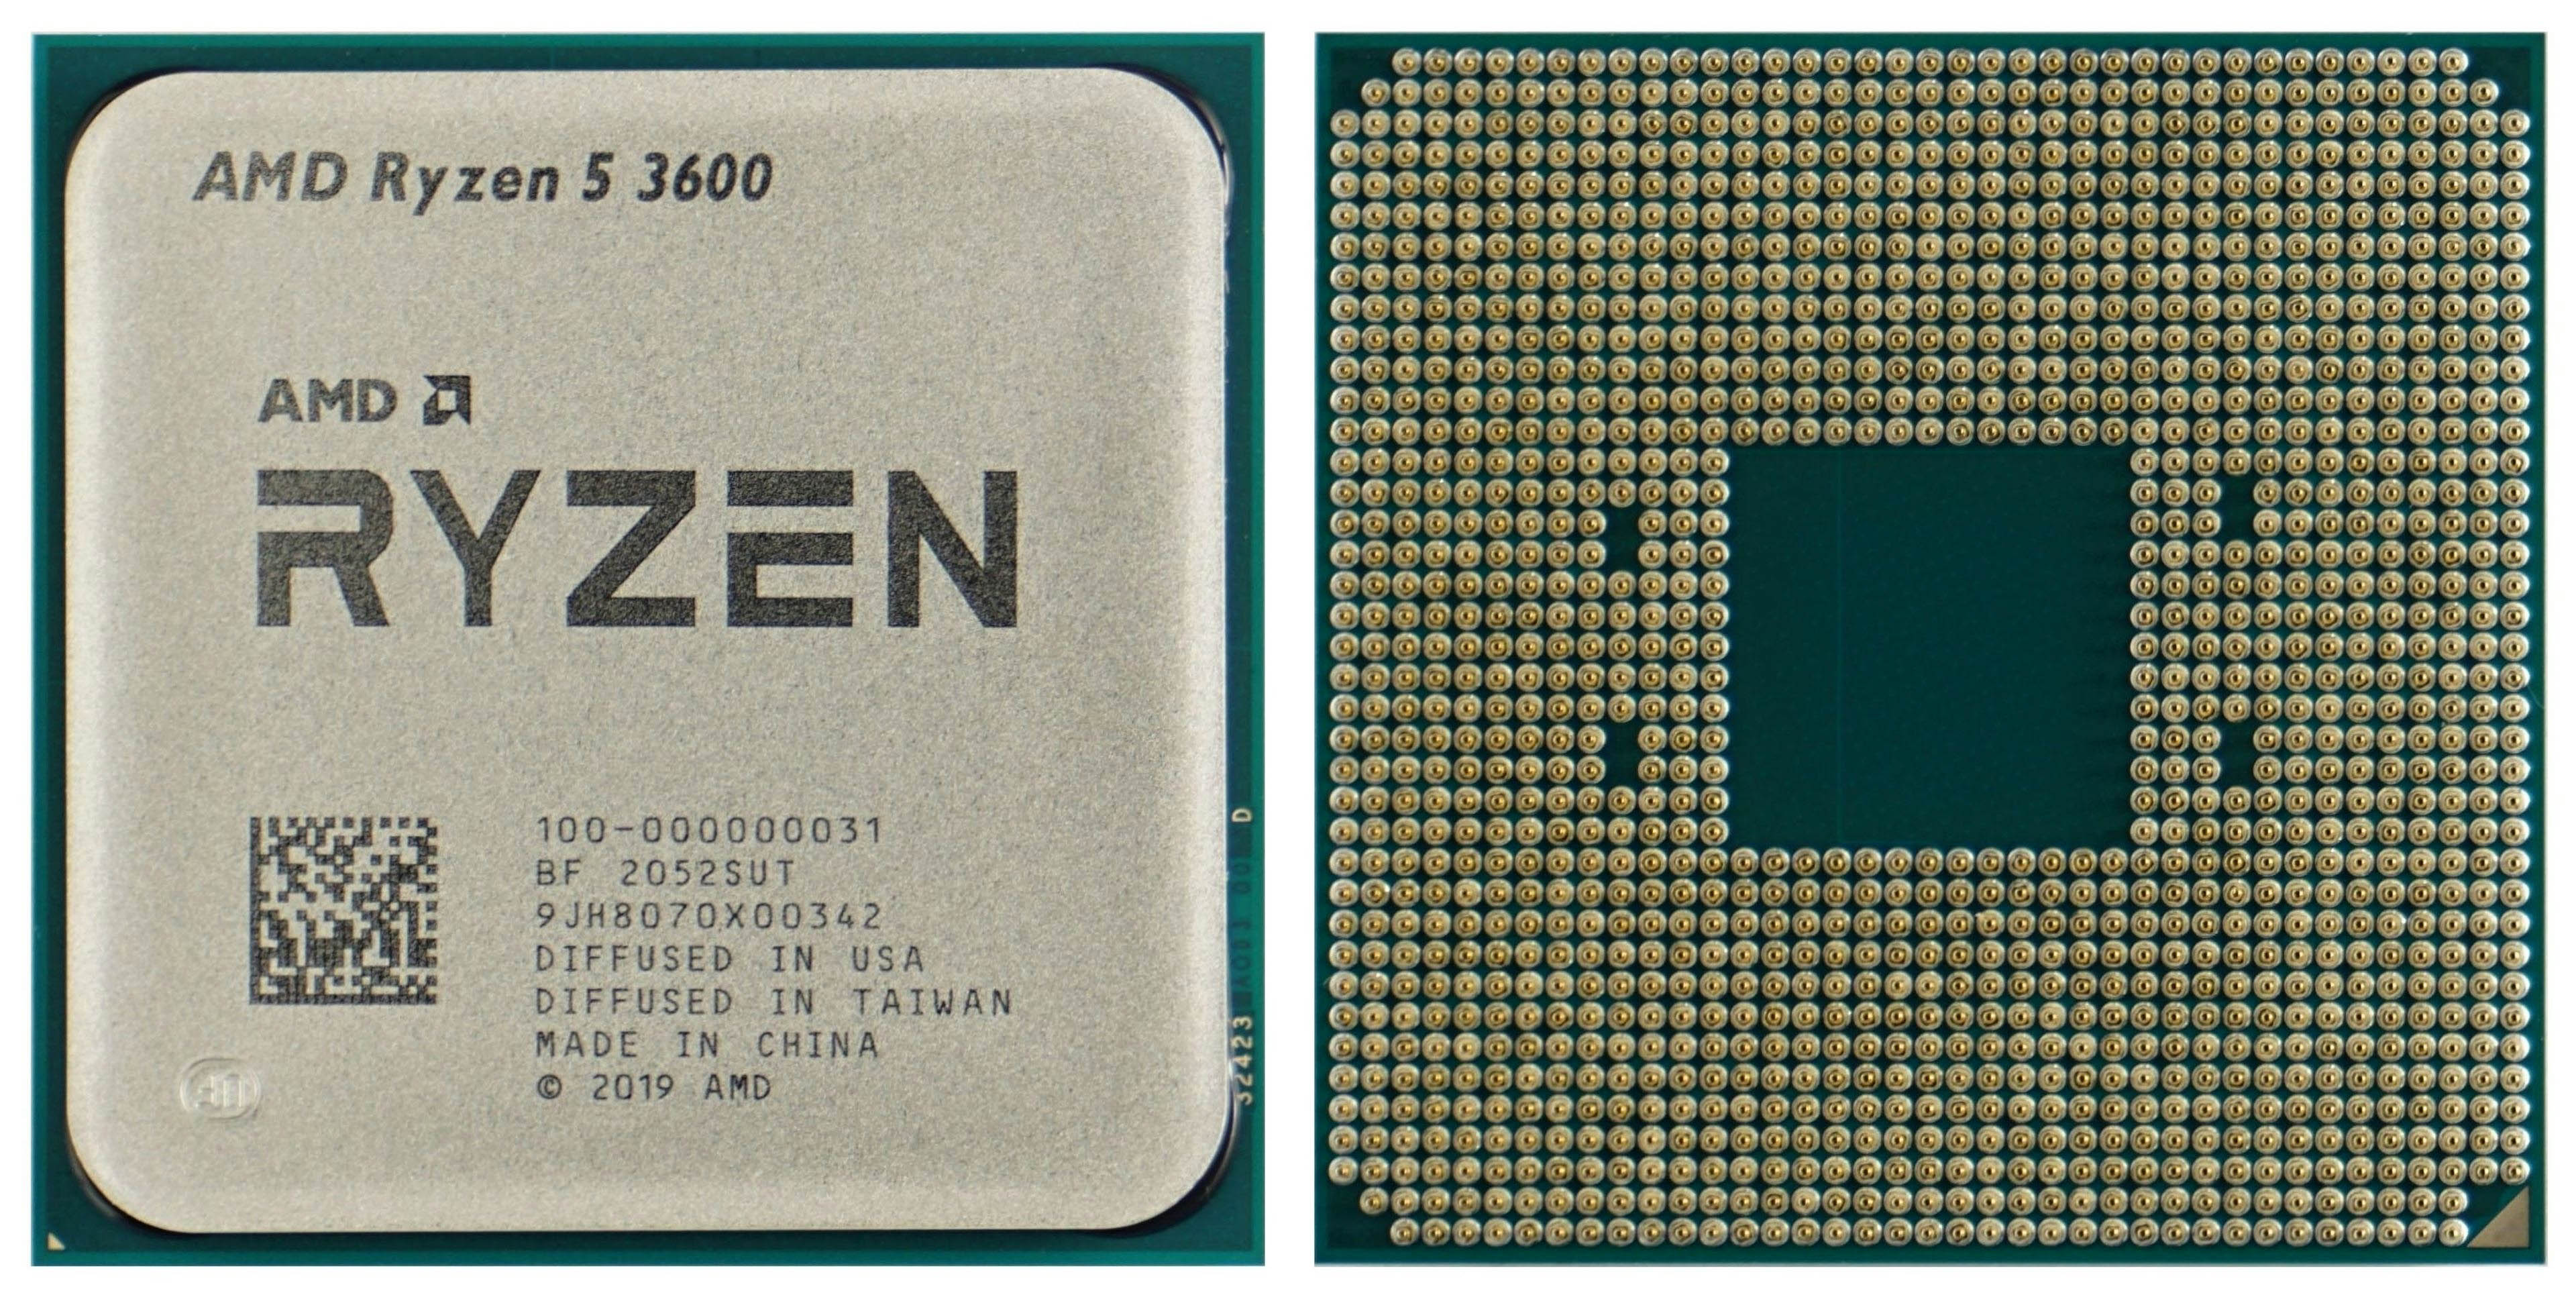 AMD Ryzen 5 3600: Older bestseller head-to-head with new CPUs